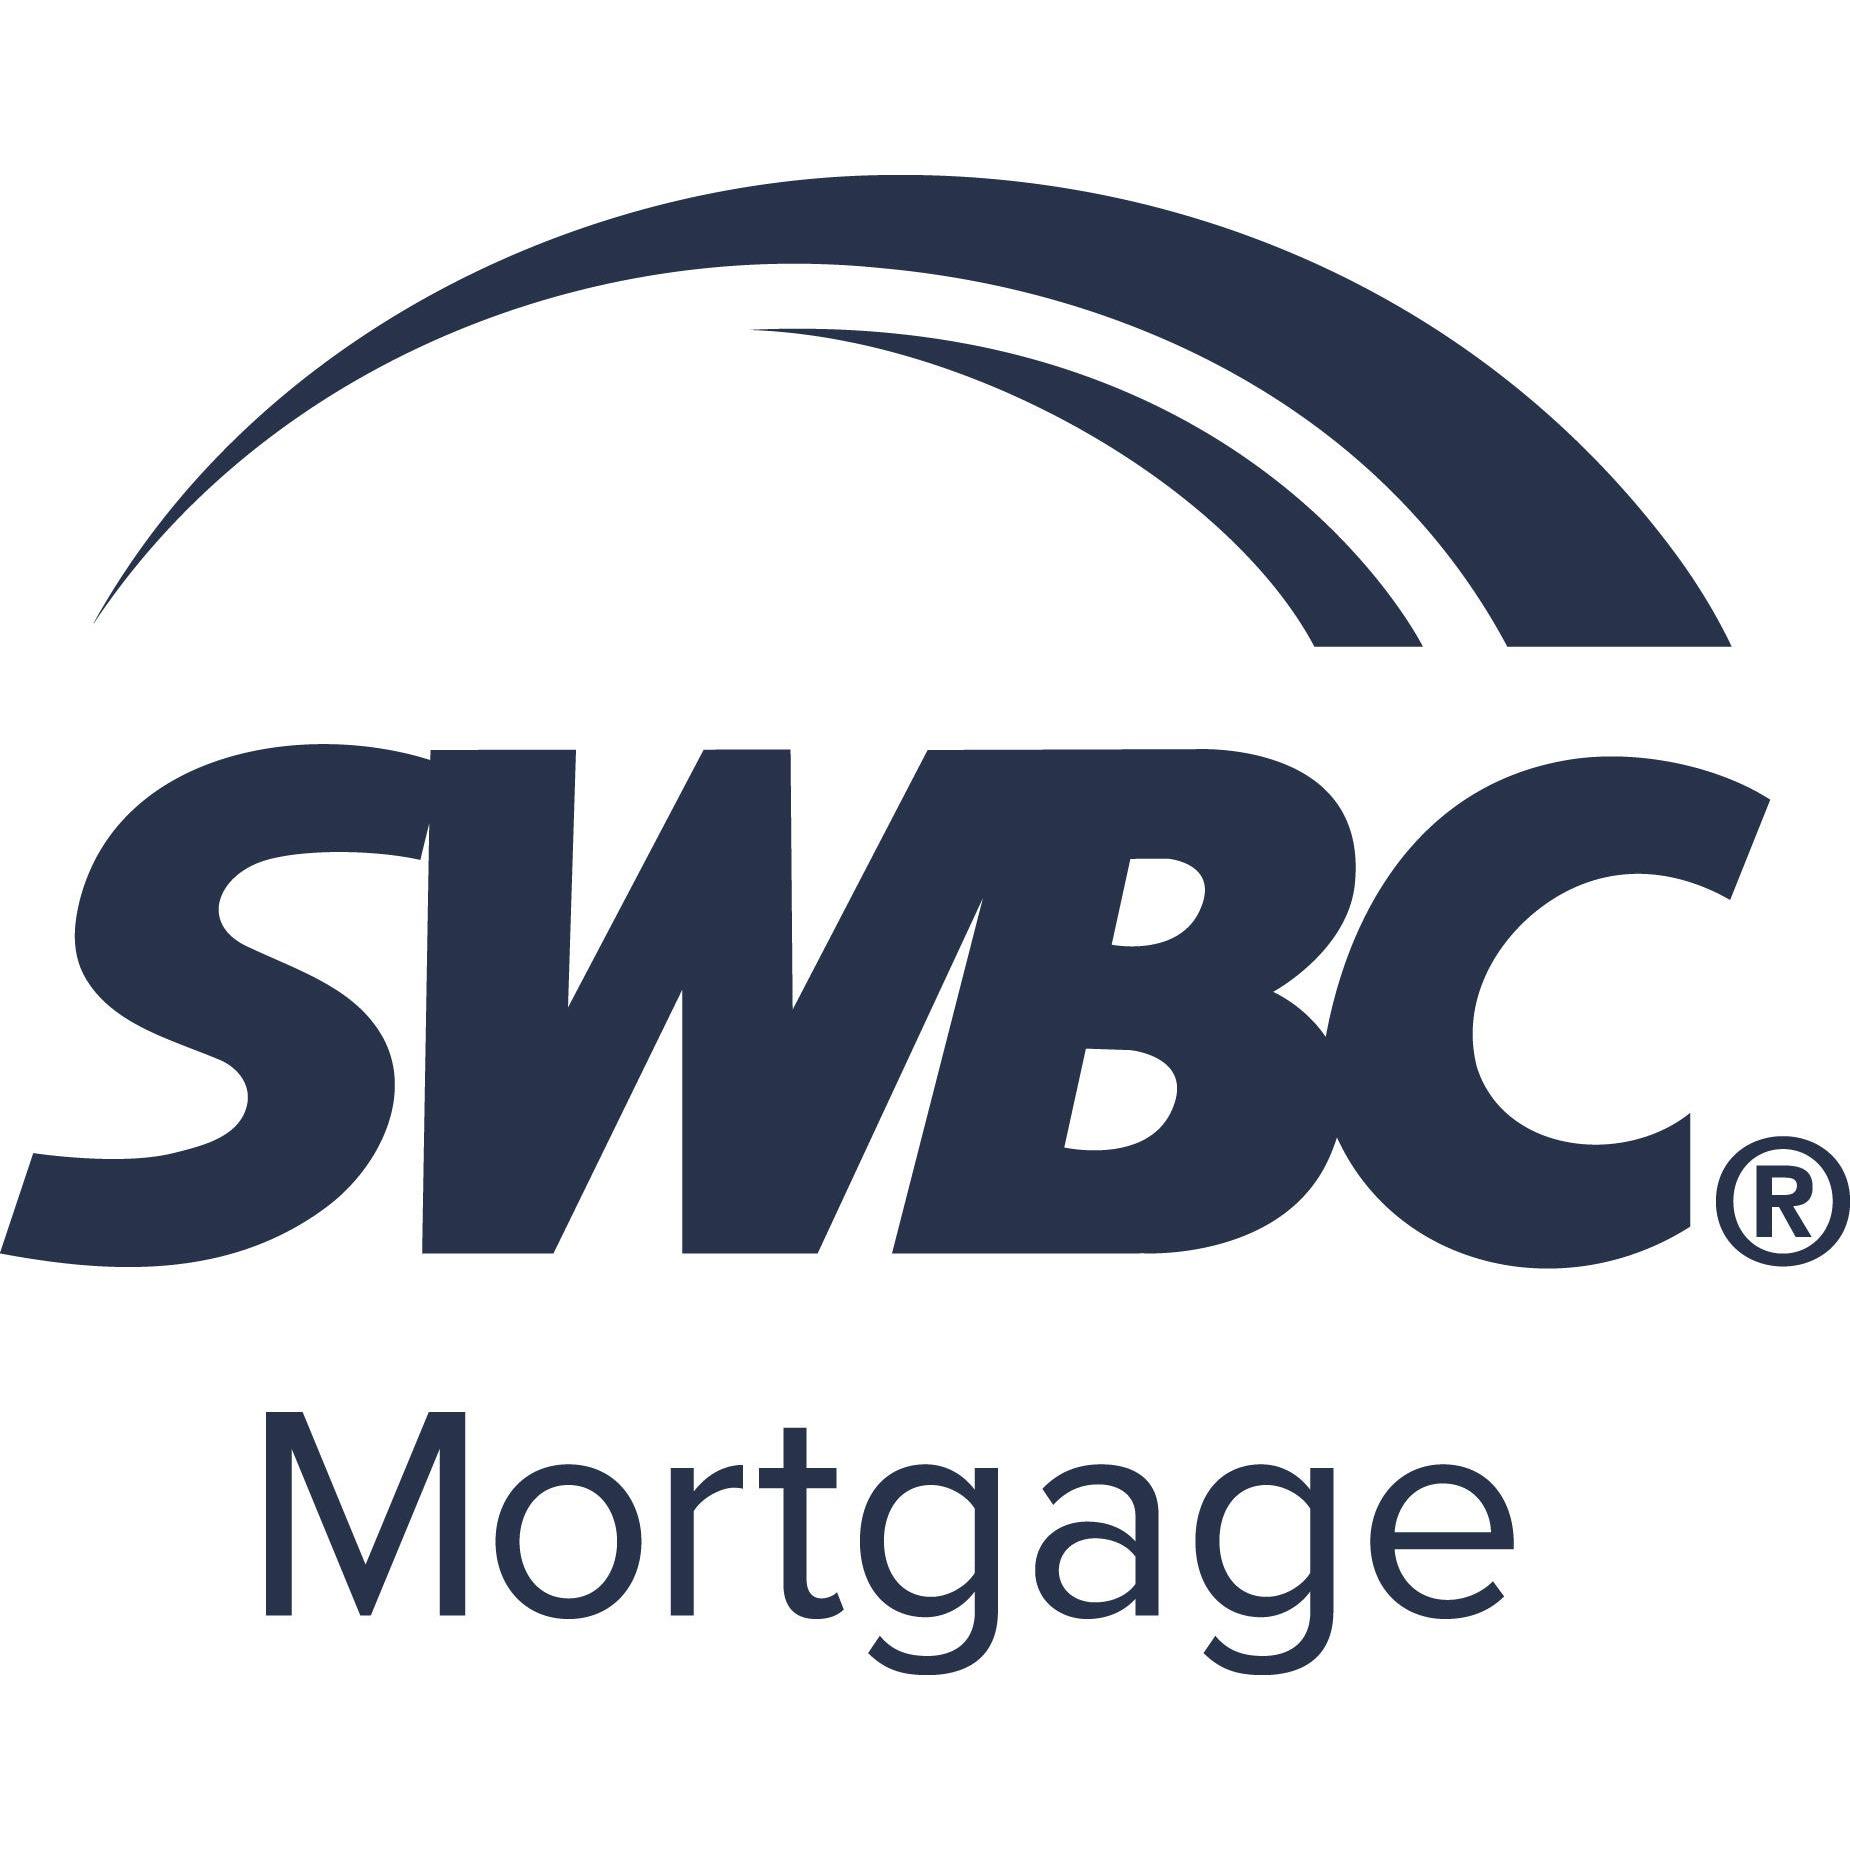 Chad Tate, SWBC Mortgage